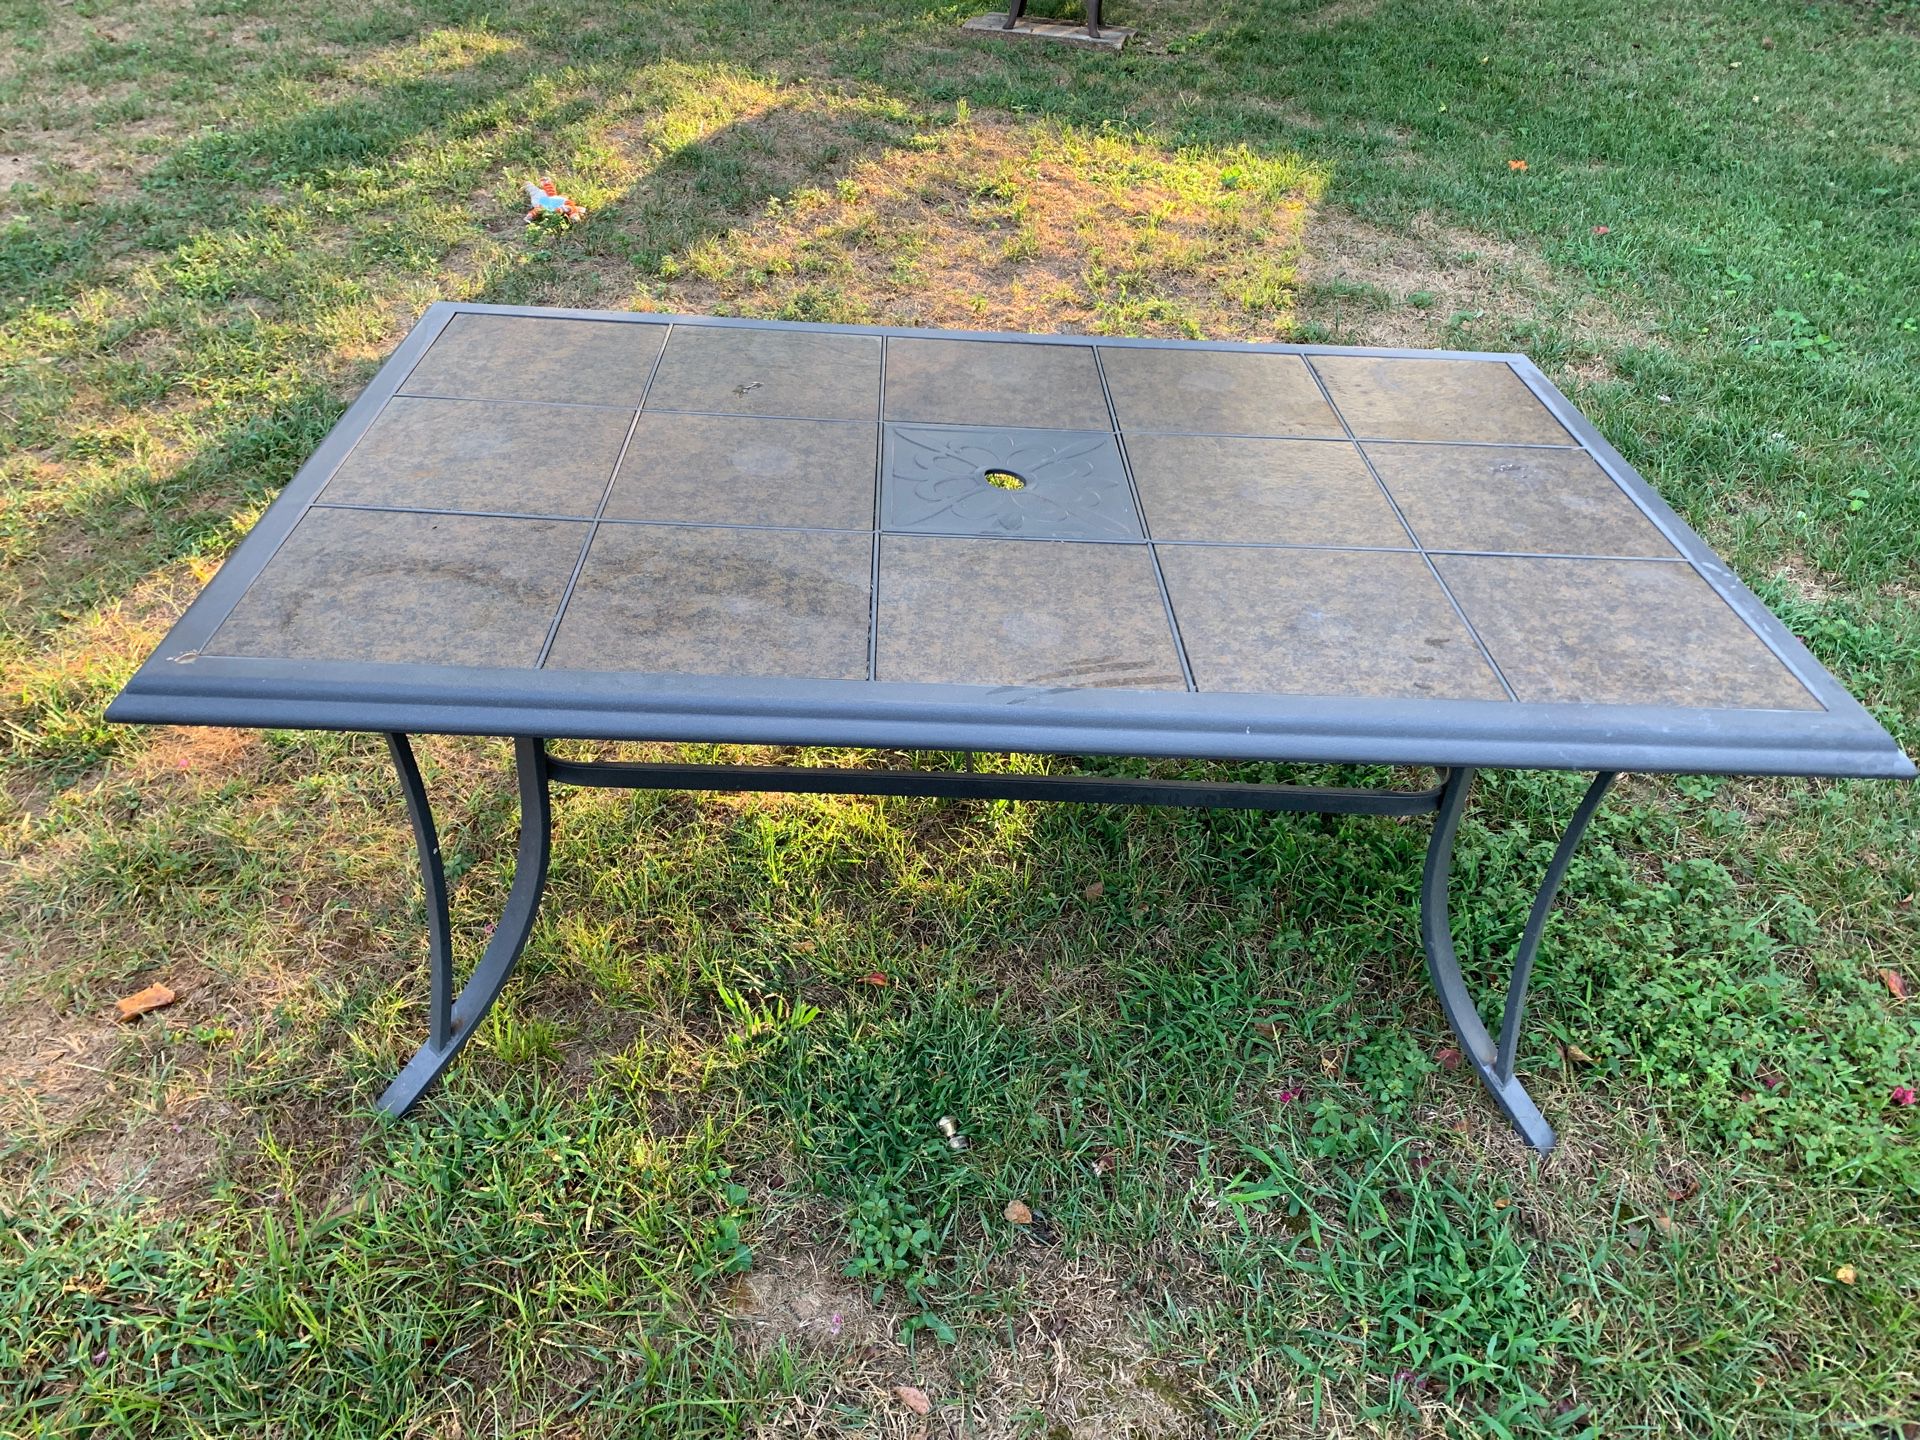 65”x40” Patio table